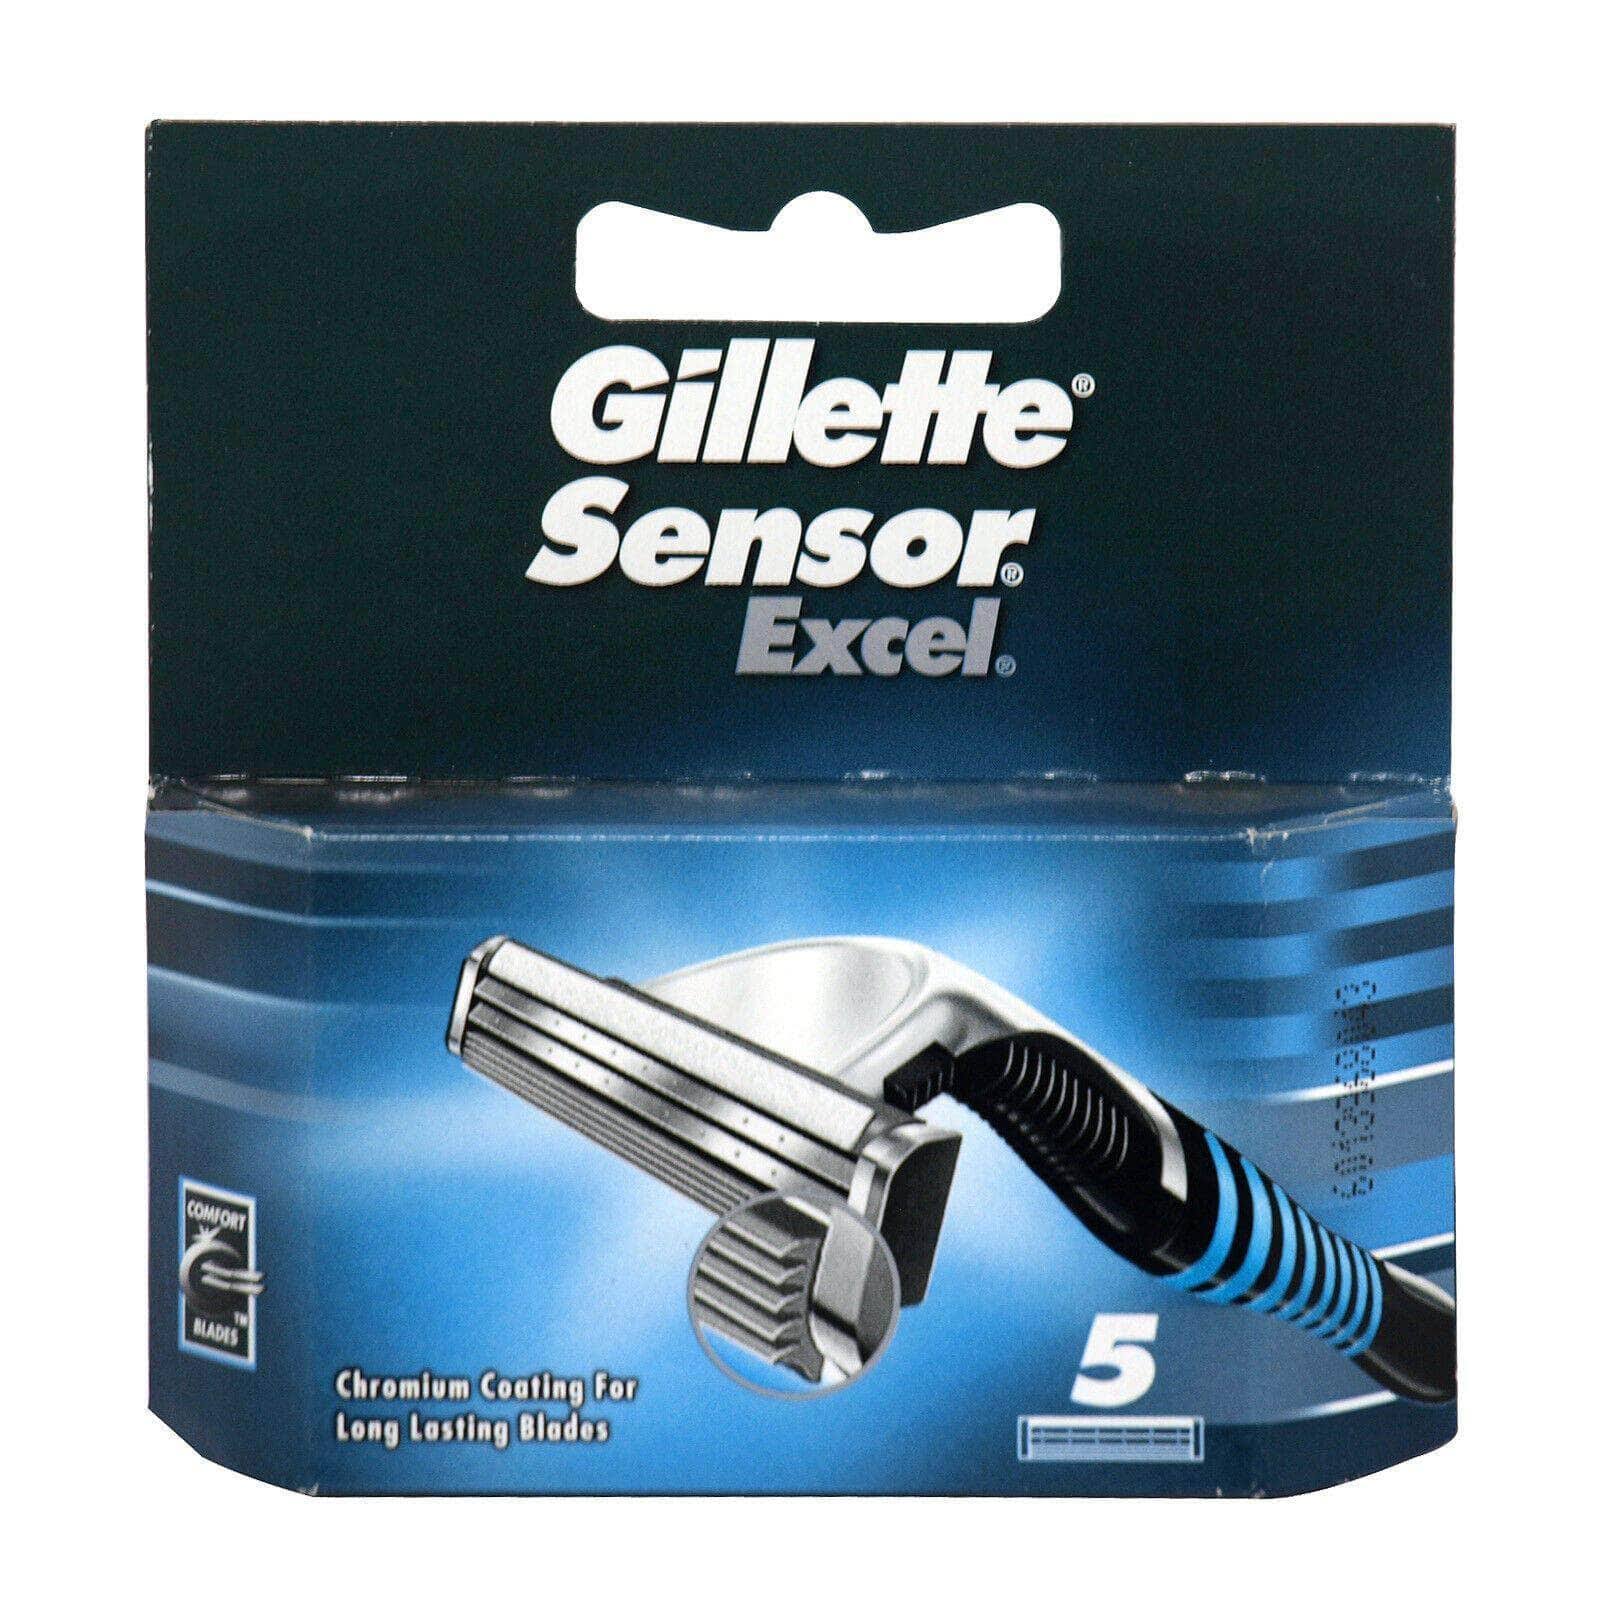 Gillette Sensor Excel Razor Blades Refill - 5pk